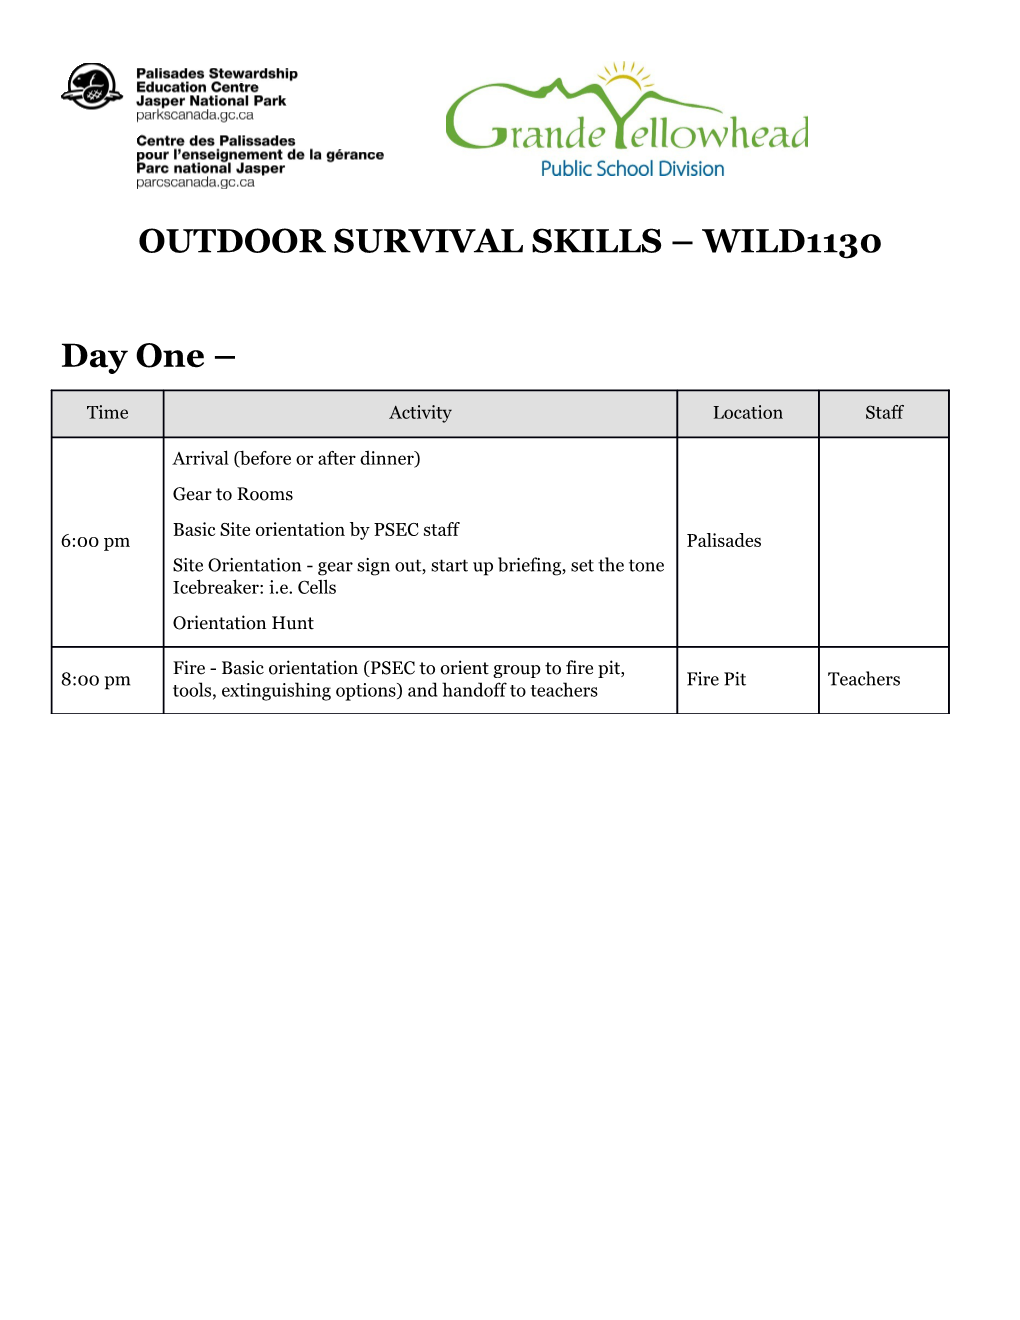 Outdoor Survival Skills Wild1130